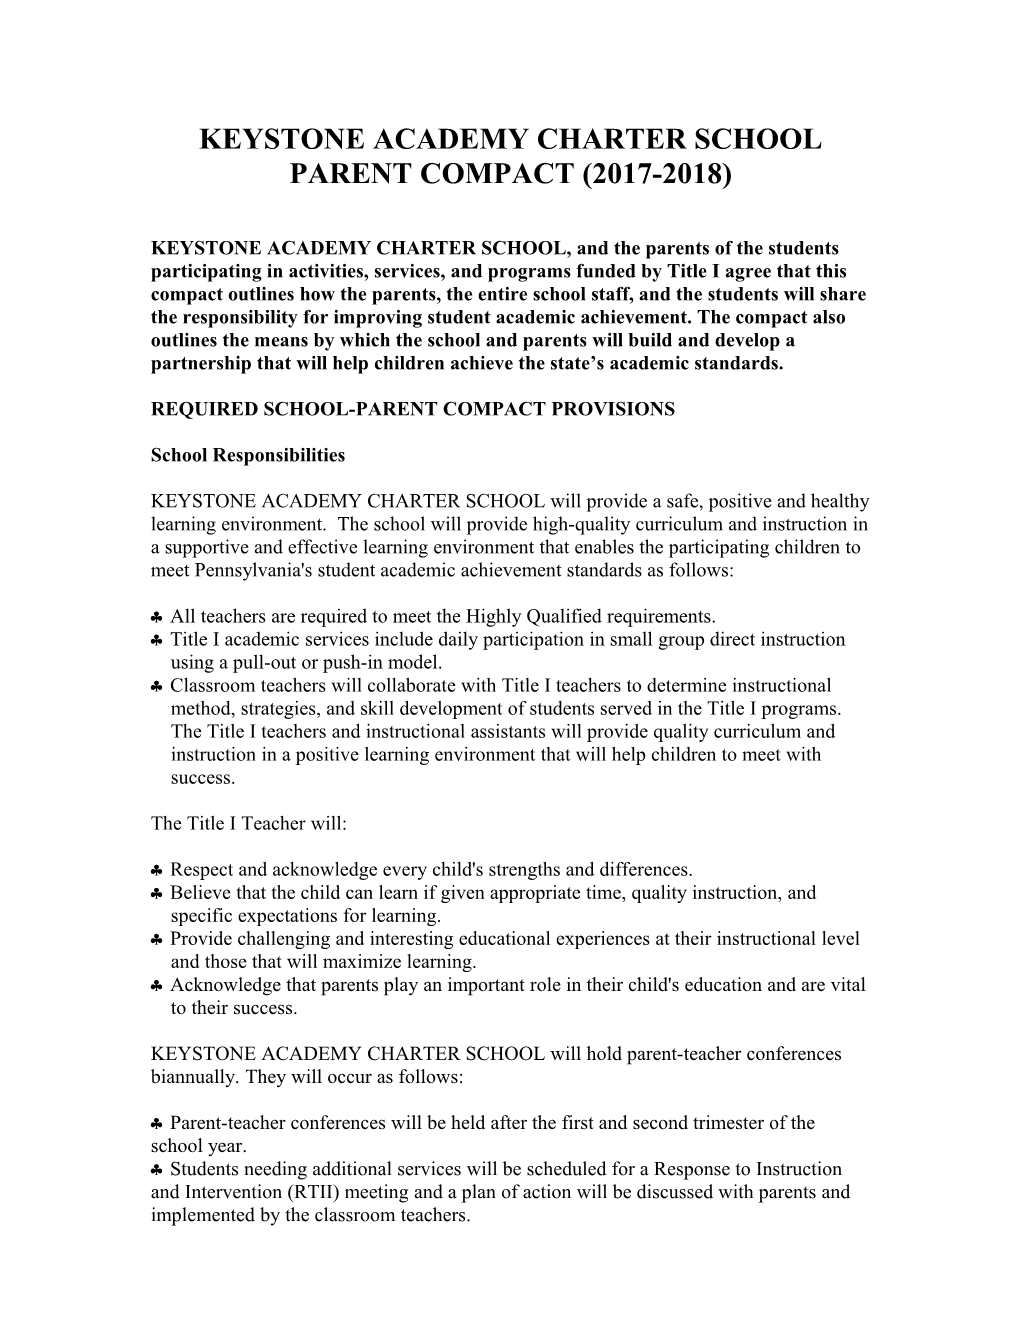 Charter School Parent Compact 2010-2011